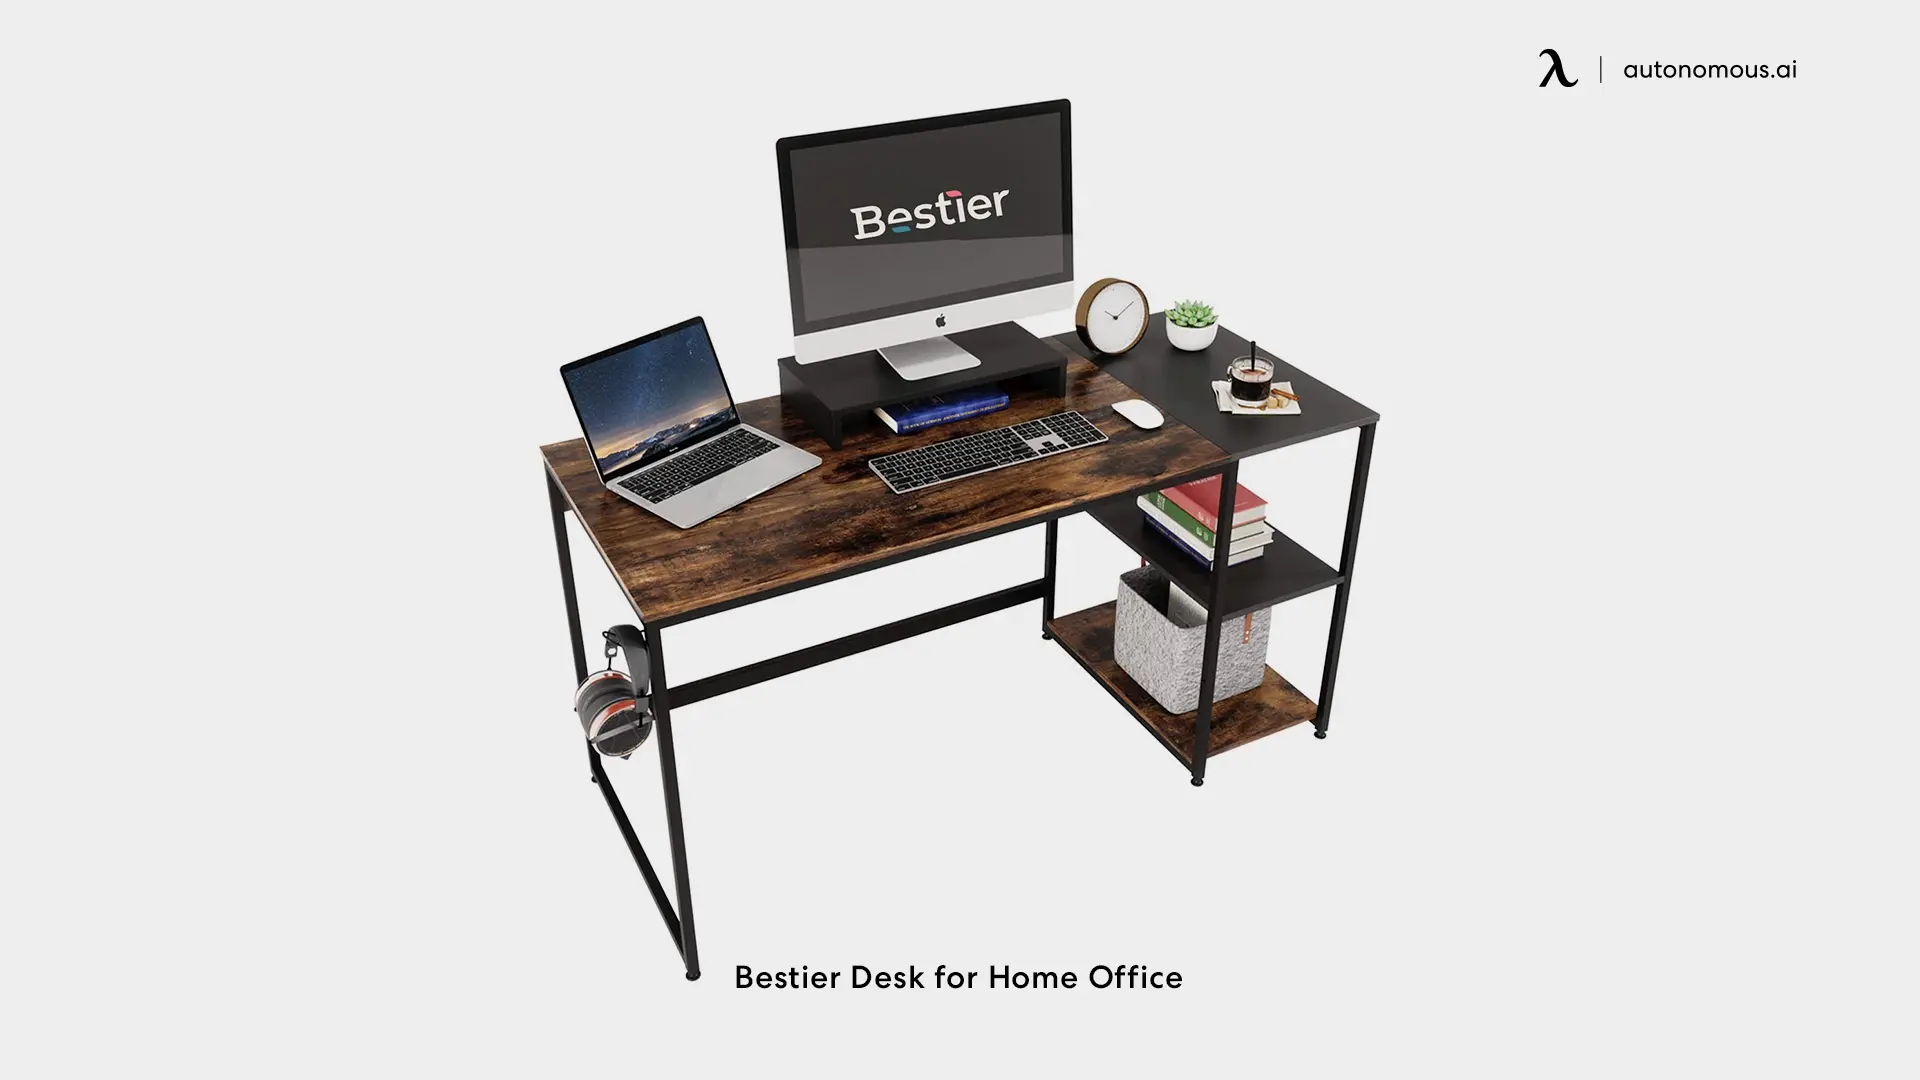 Bestier Desk for Home Office